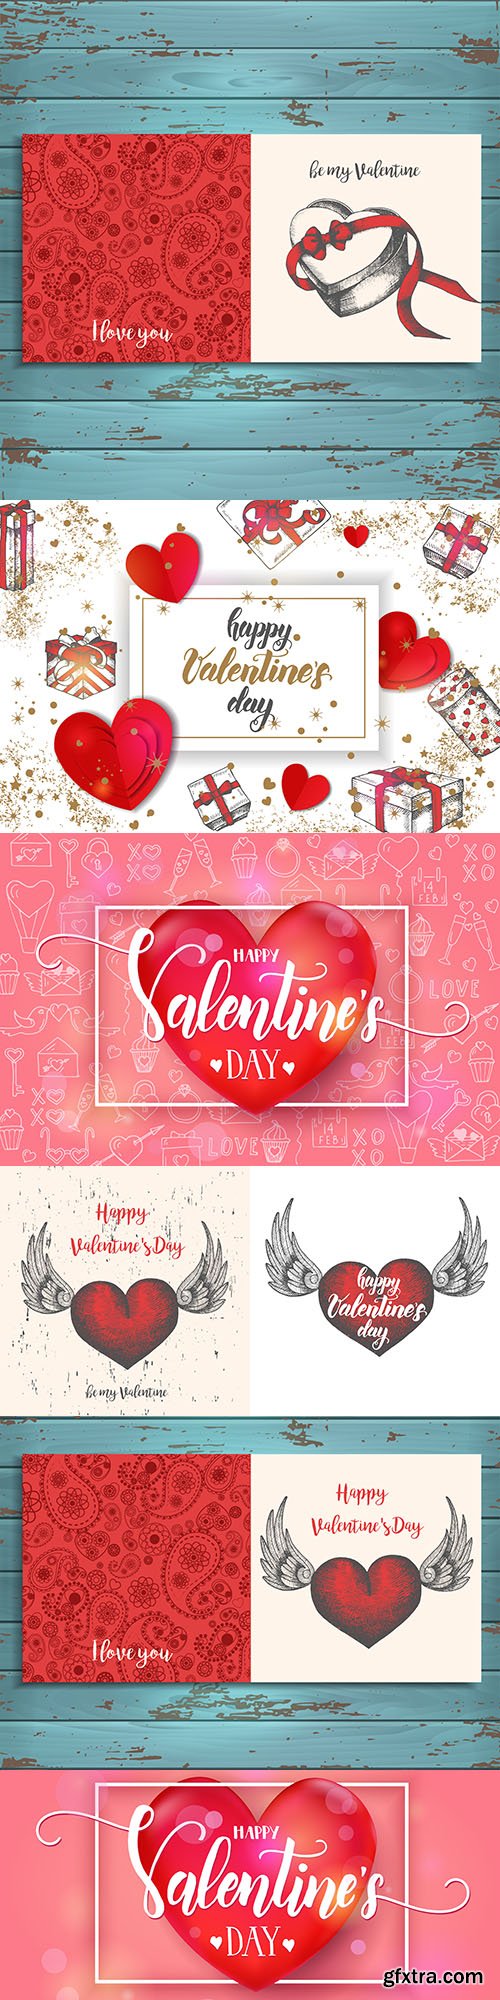 St. Valentine\'s Day romantic illustrations retro style